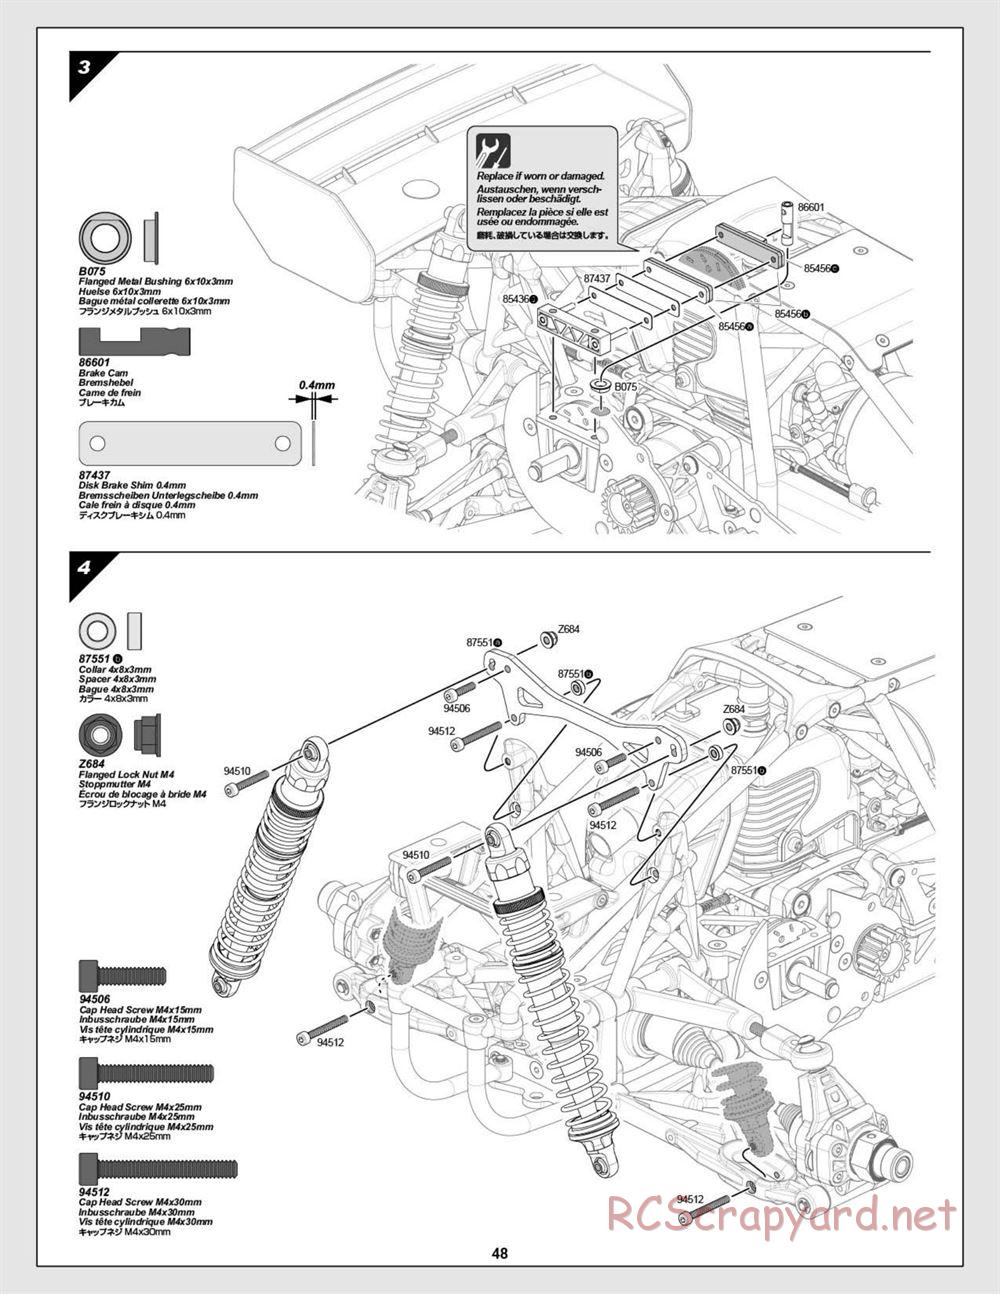 HPI - Baja 5B 2.0 RTR - Manual - Page 48